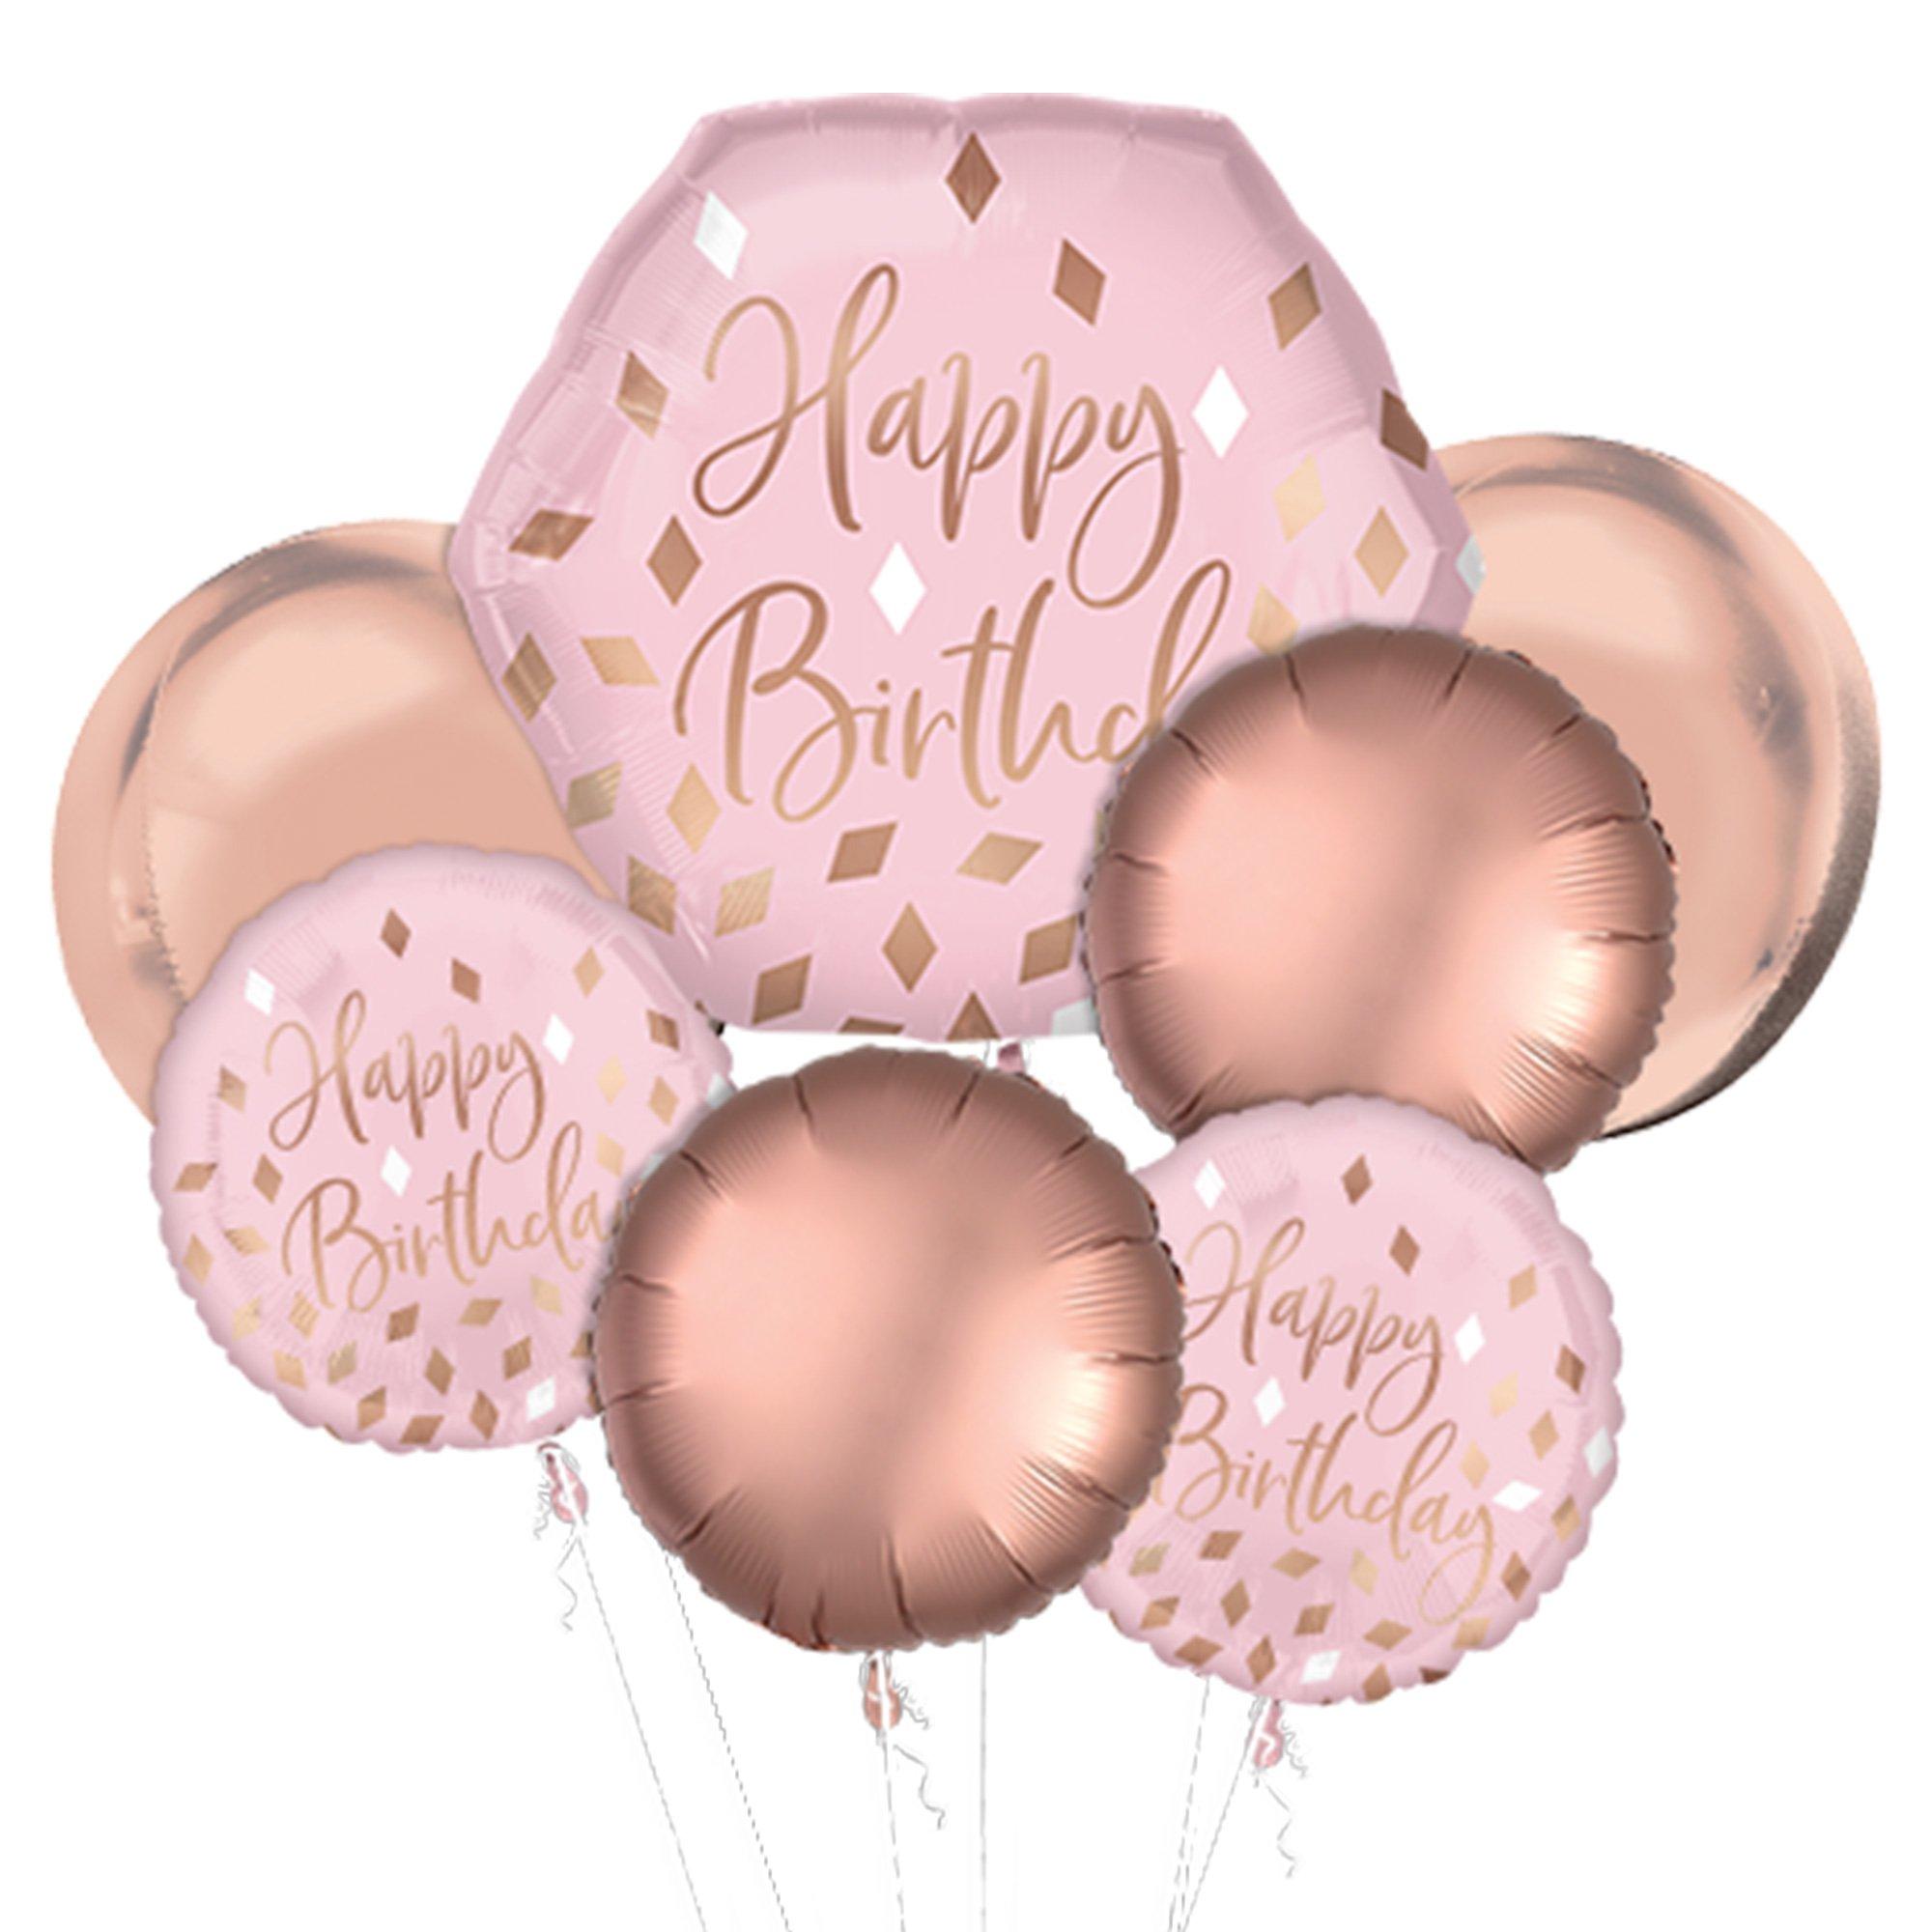 Hollywood balloon bouquet, hollywood balloons, hollywood party balloons,  hollywood party balloon decorations, balloons, mylar balloons